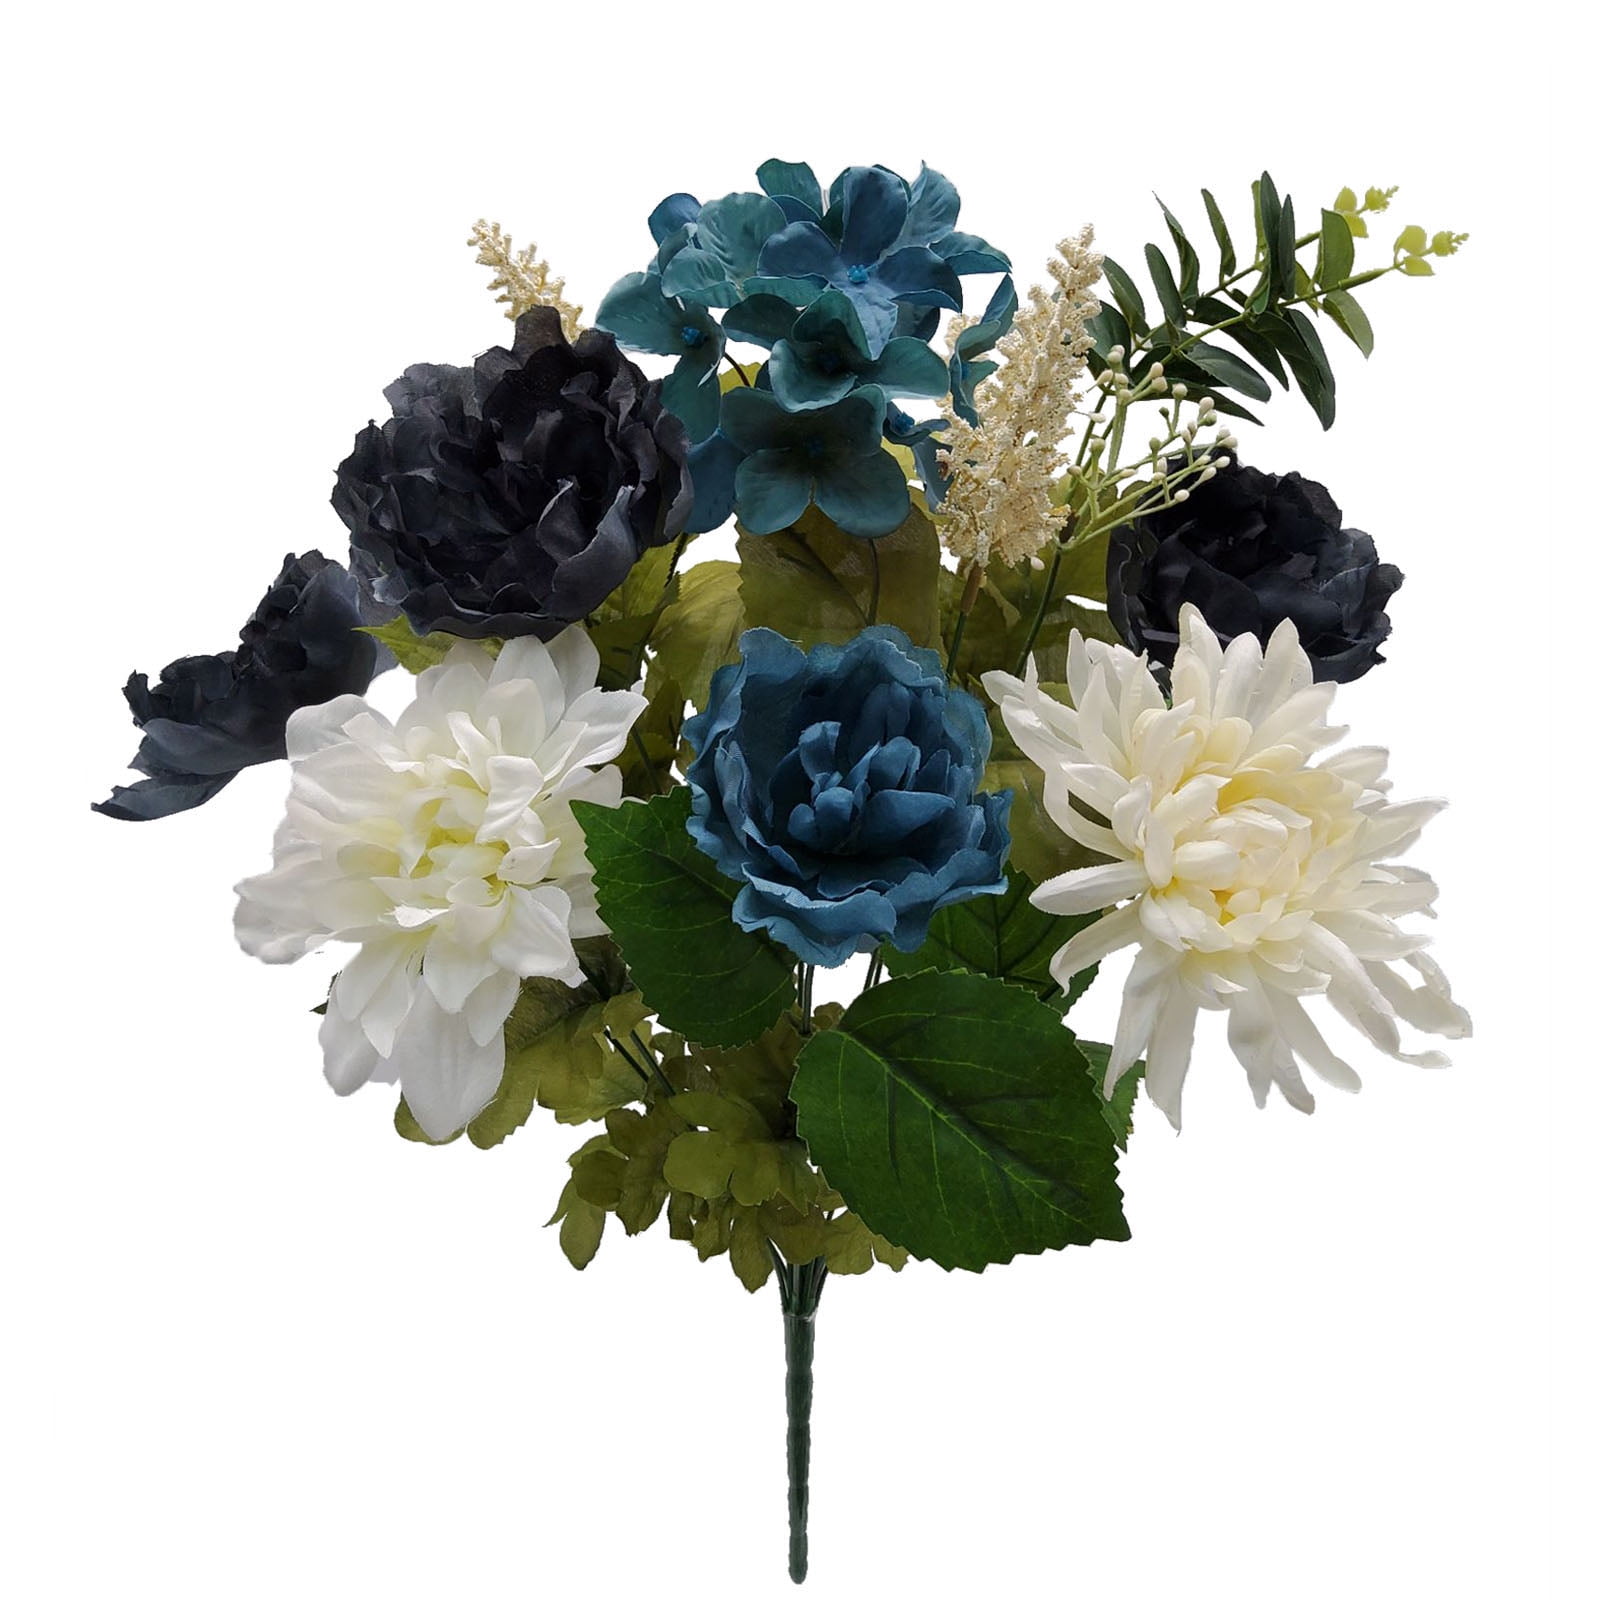 Mainstays 21.5" Artificial Flower Hydrangea Peony Bouquet, Navy Cream Color.